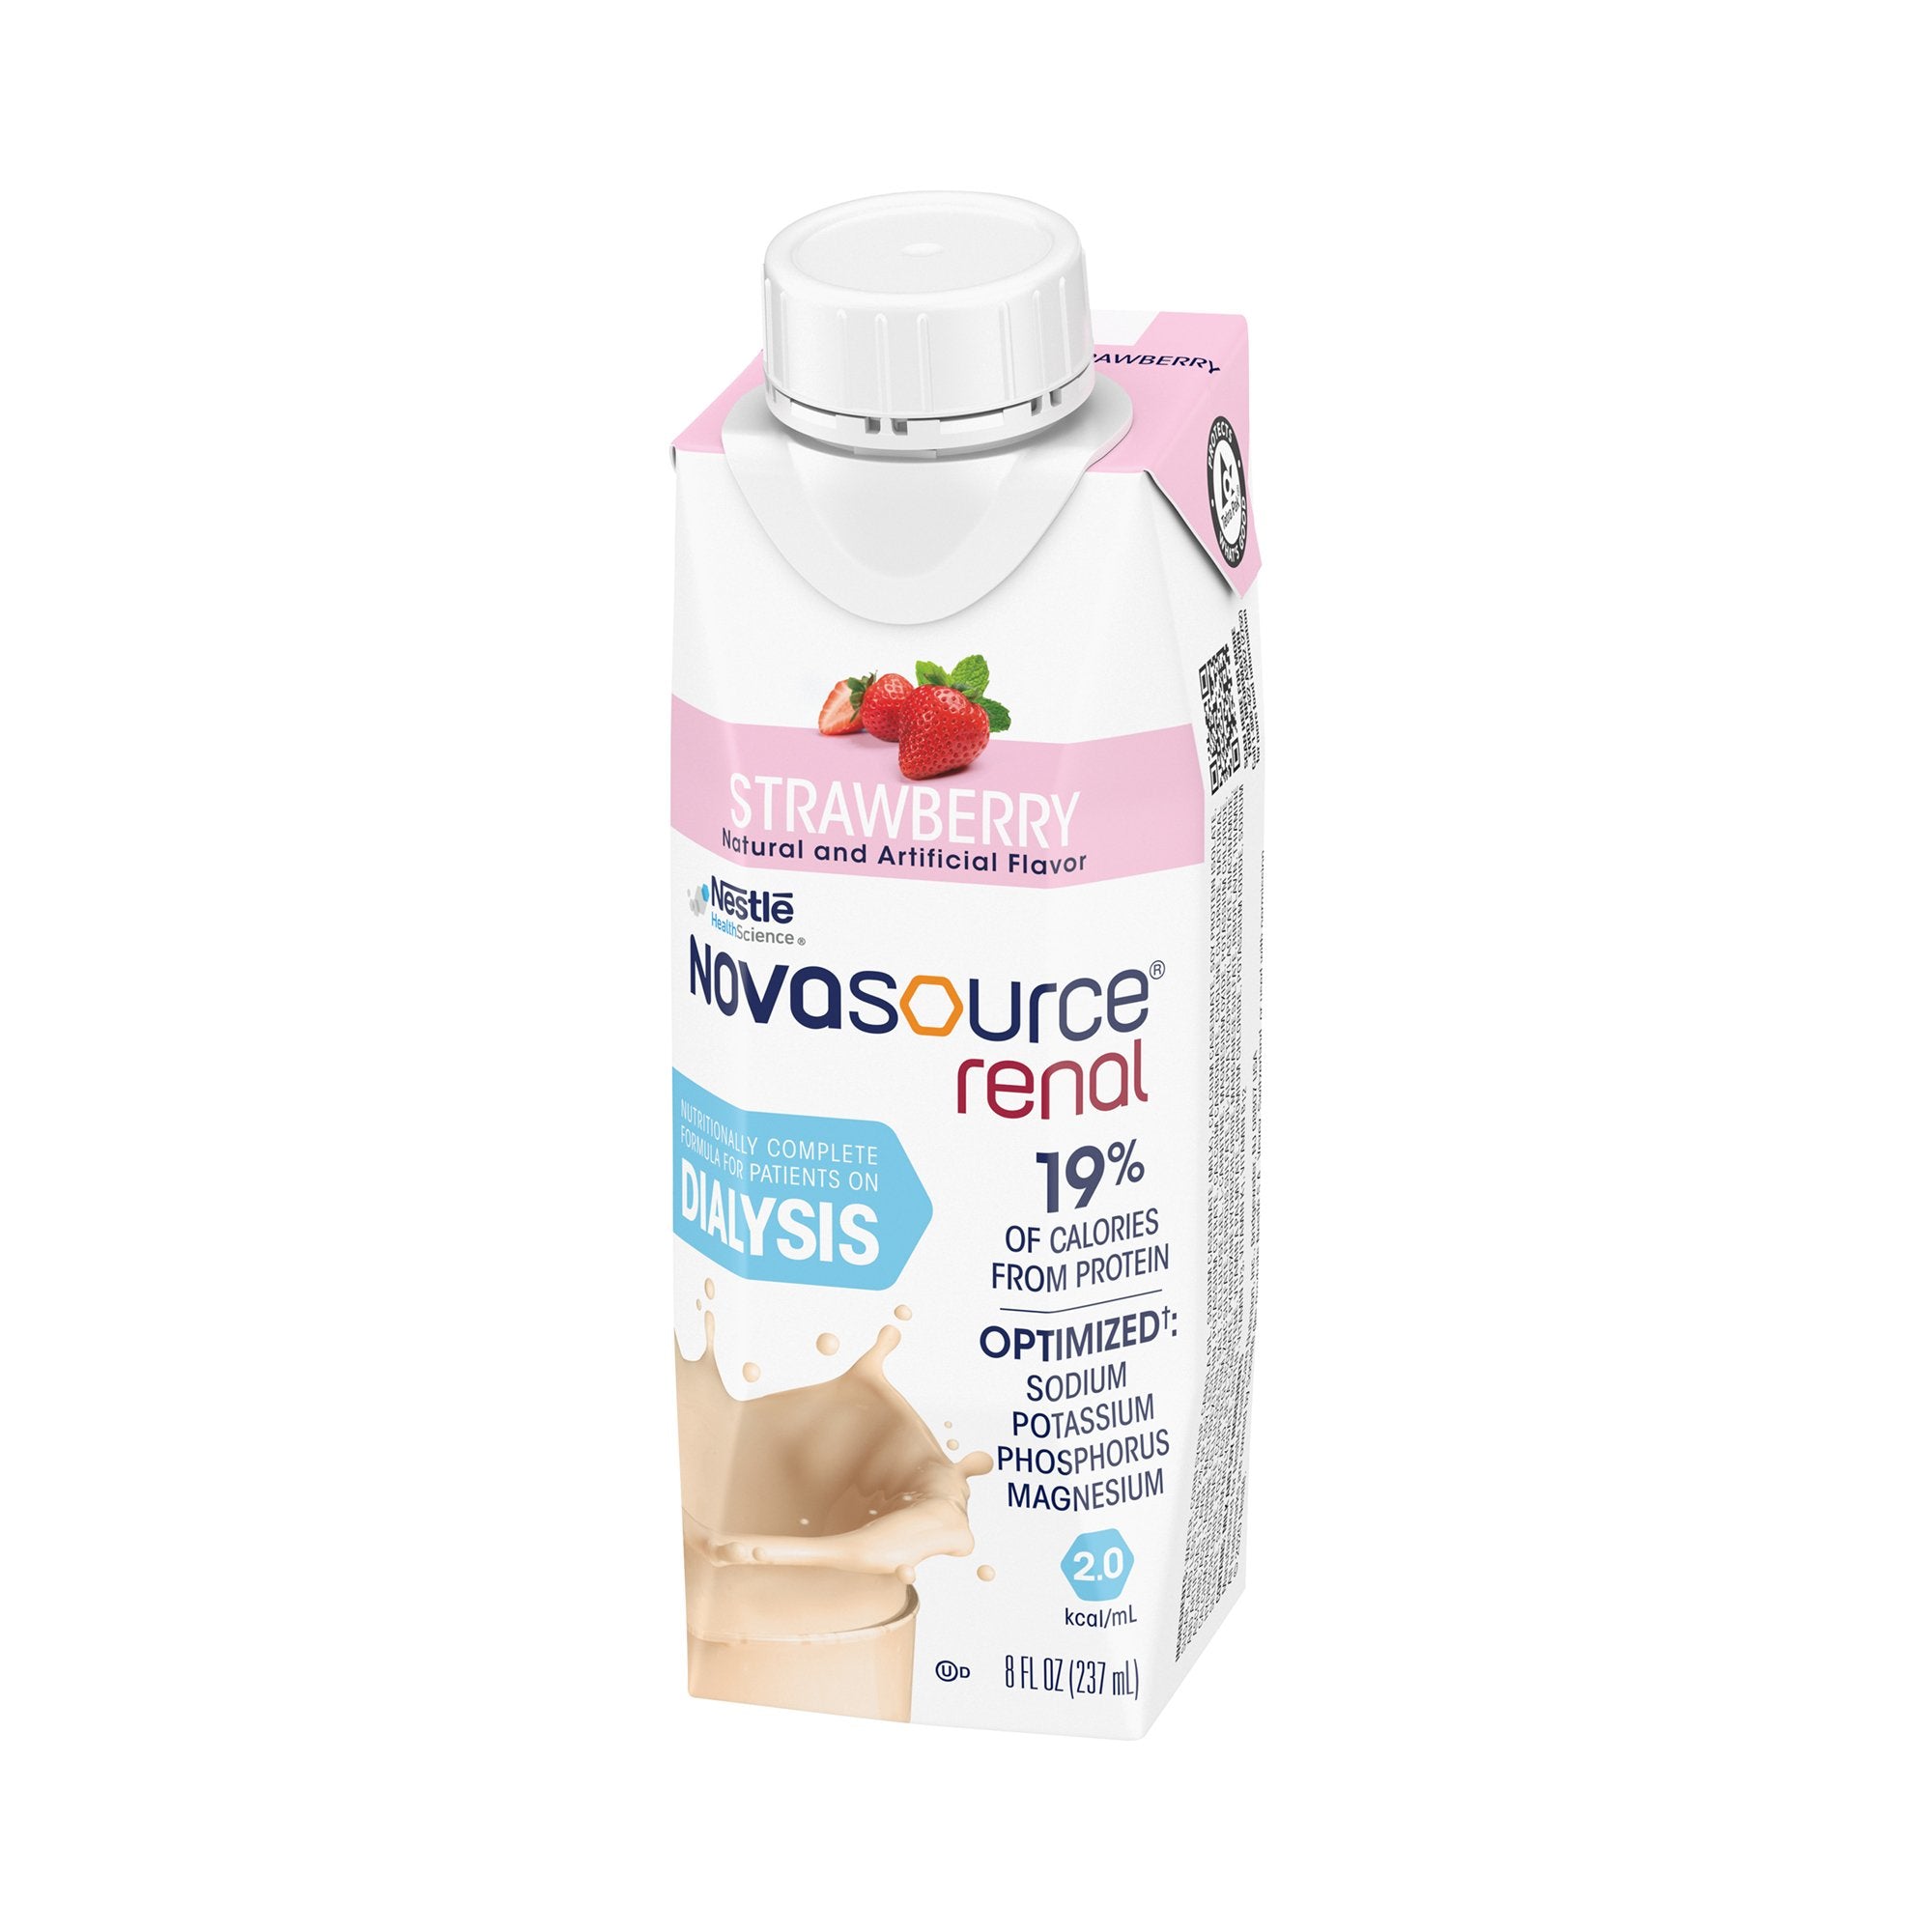 Oral Supplement Novasource Renal Strawberry Flavor Liquid 8 oz. Carton